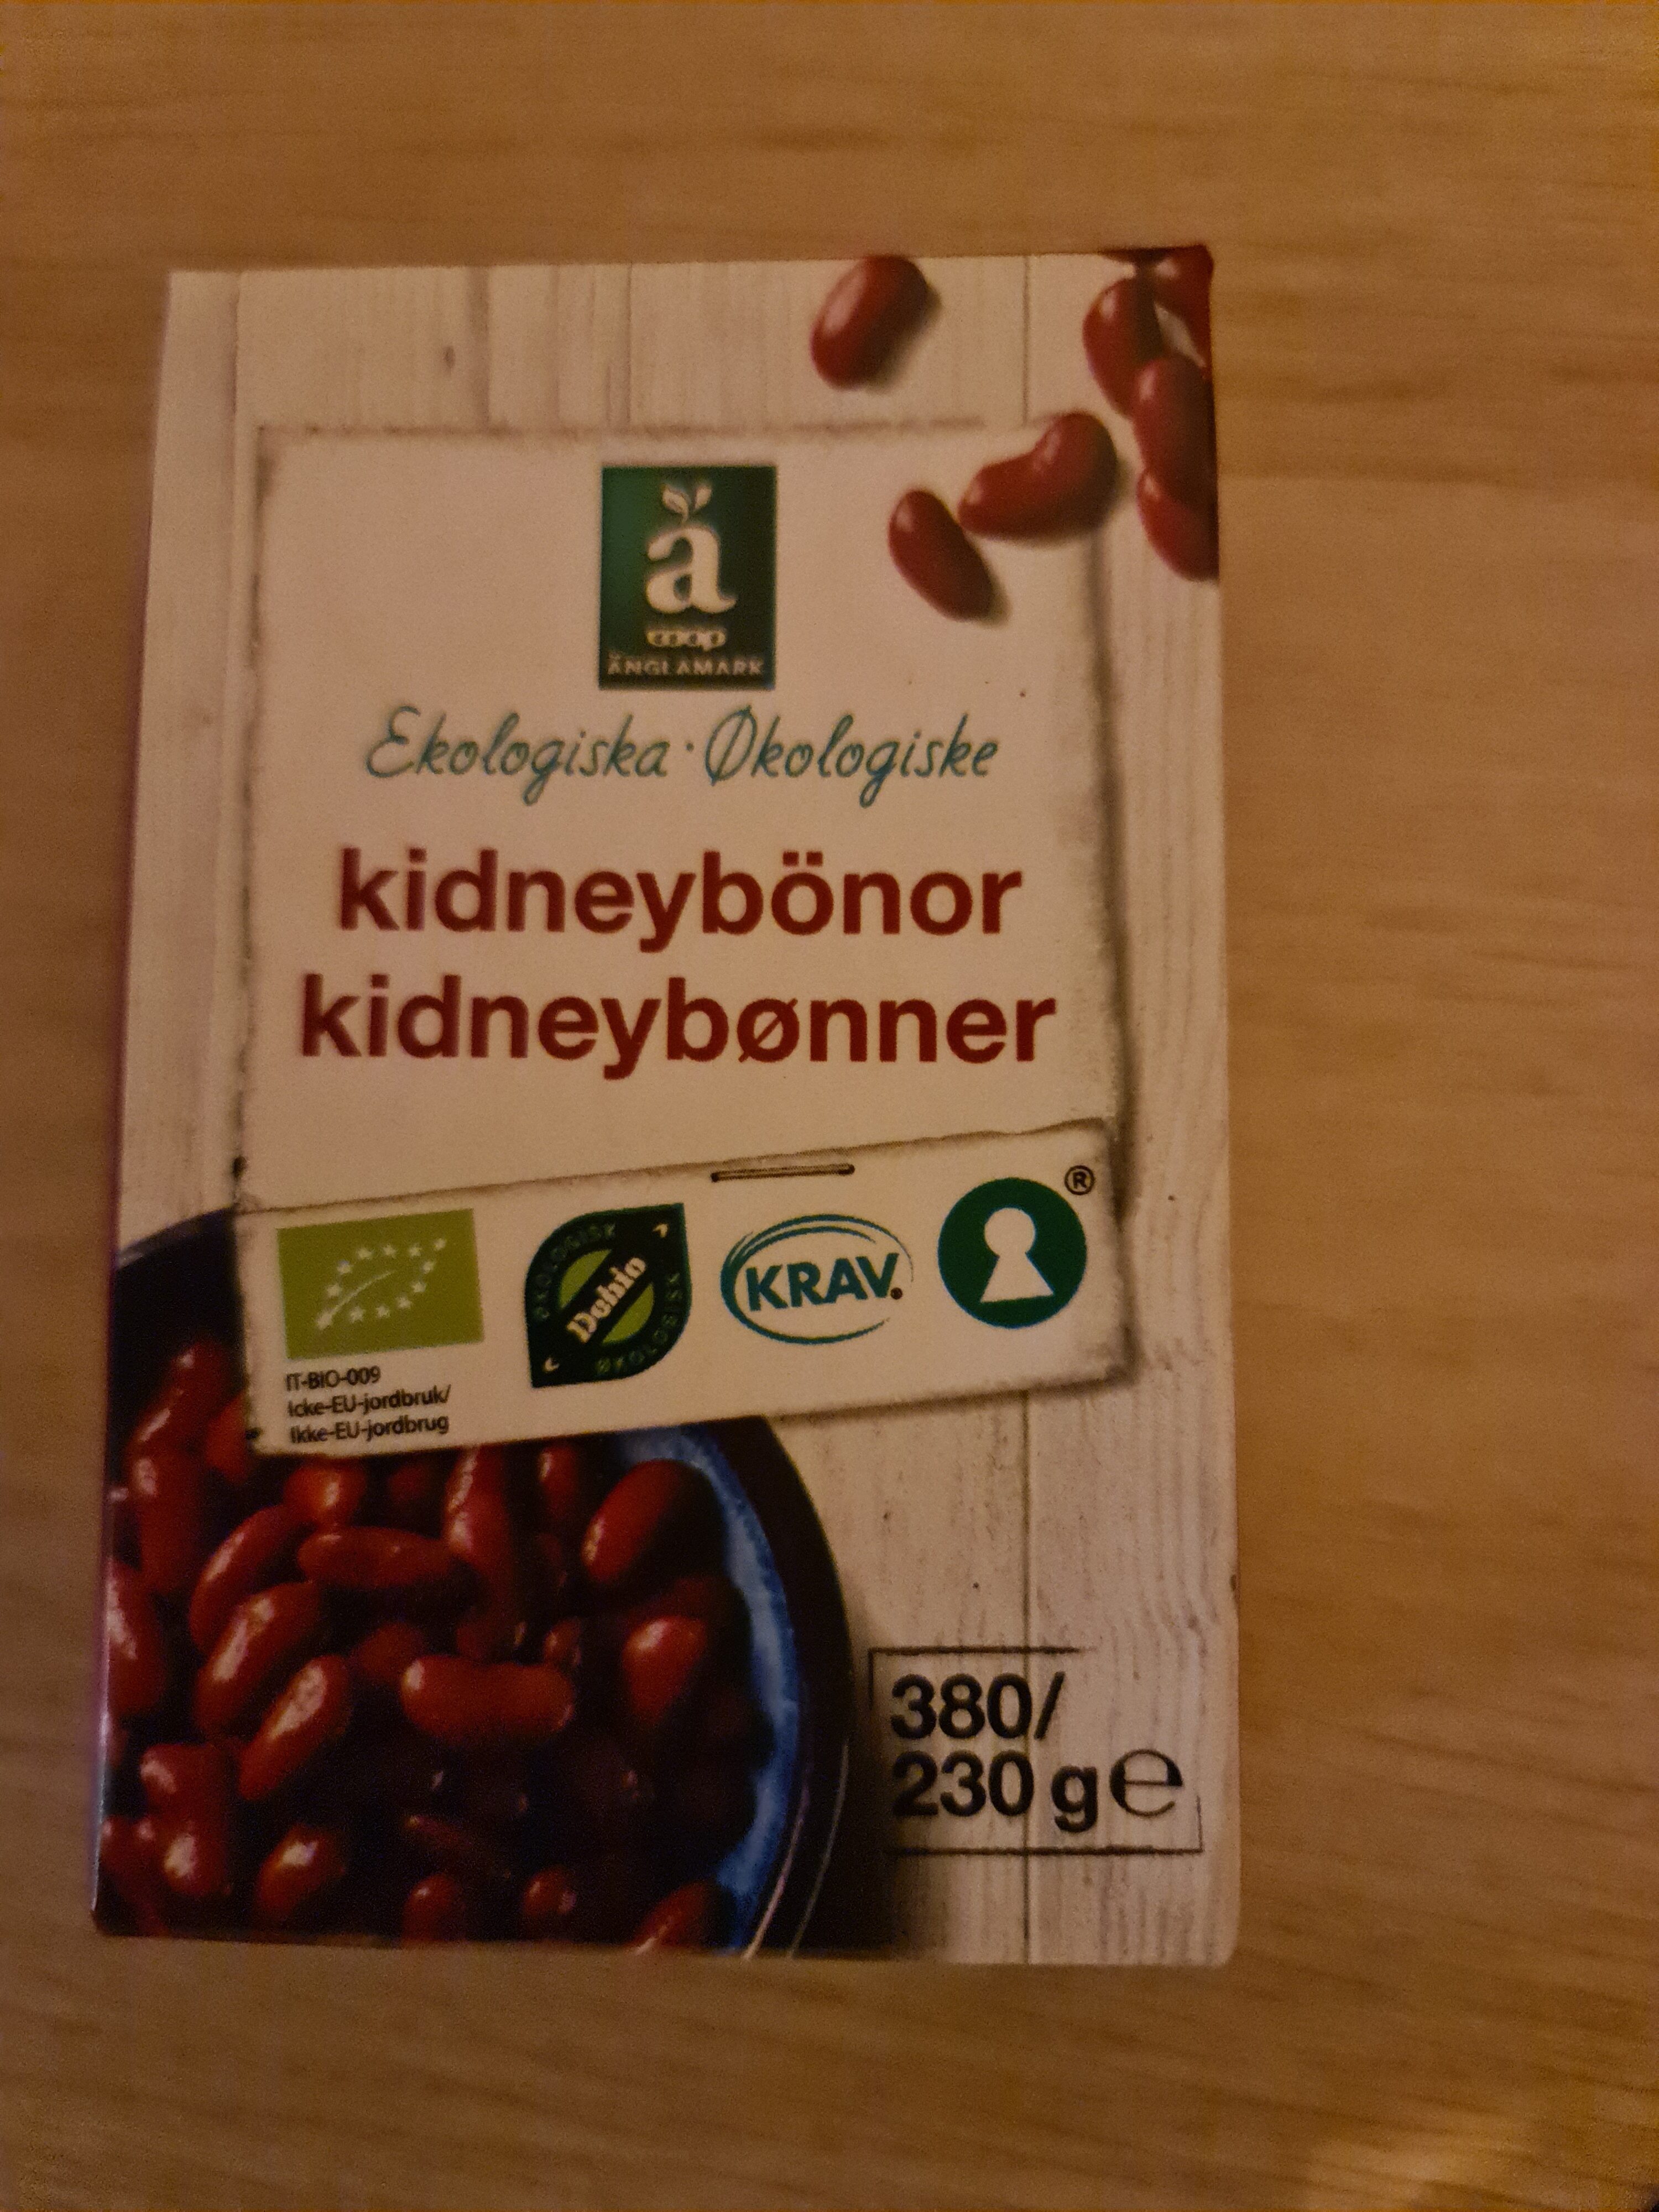 Kidneybønner - Produkt - en